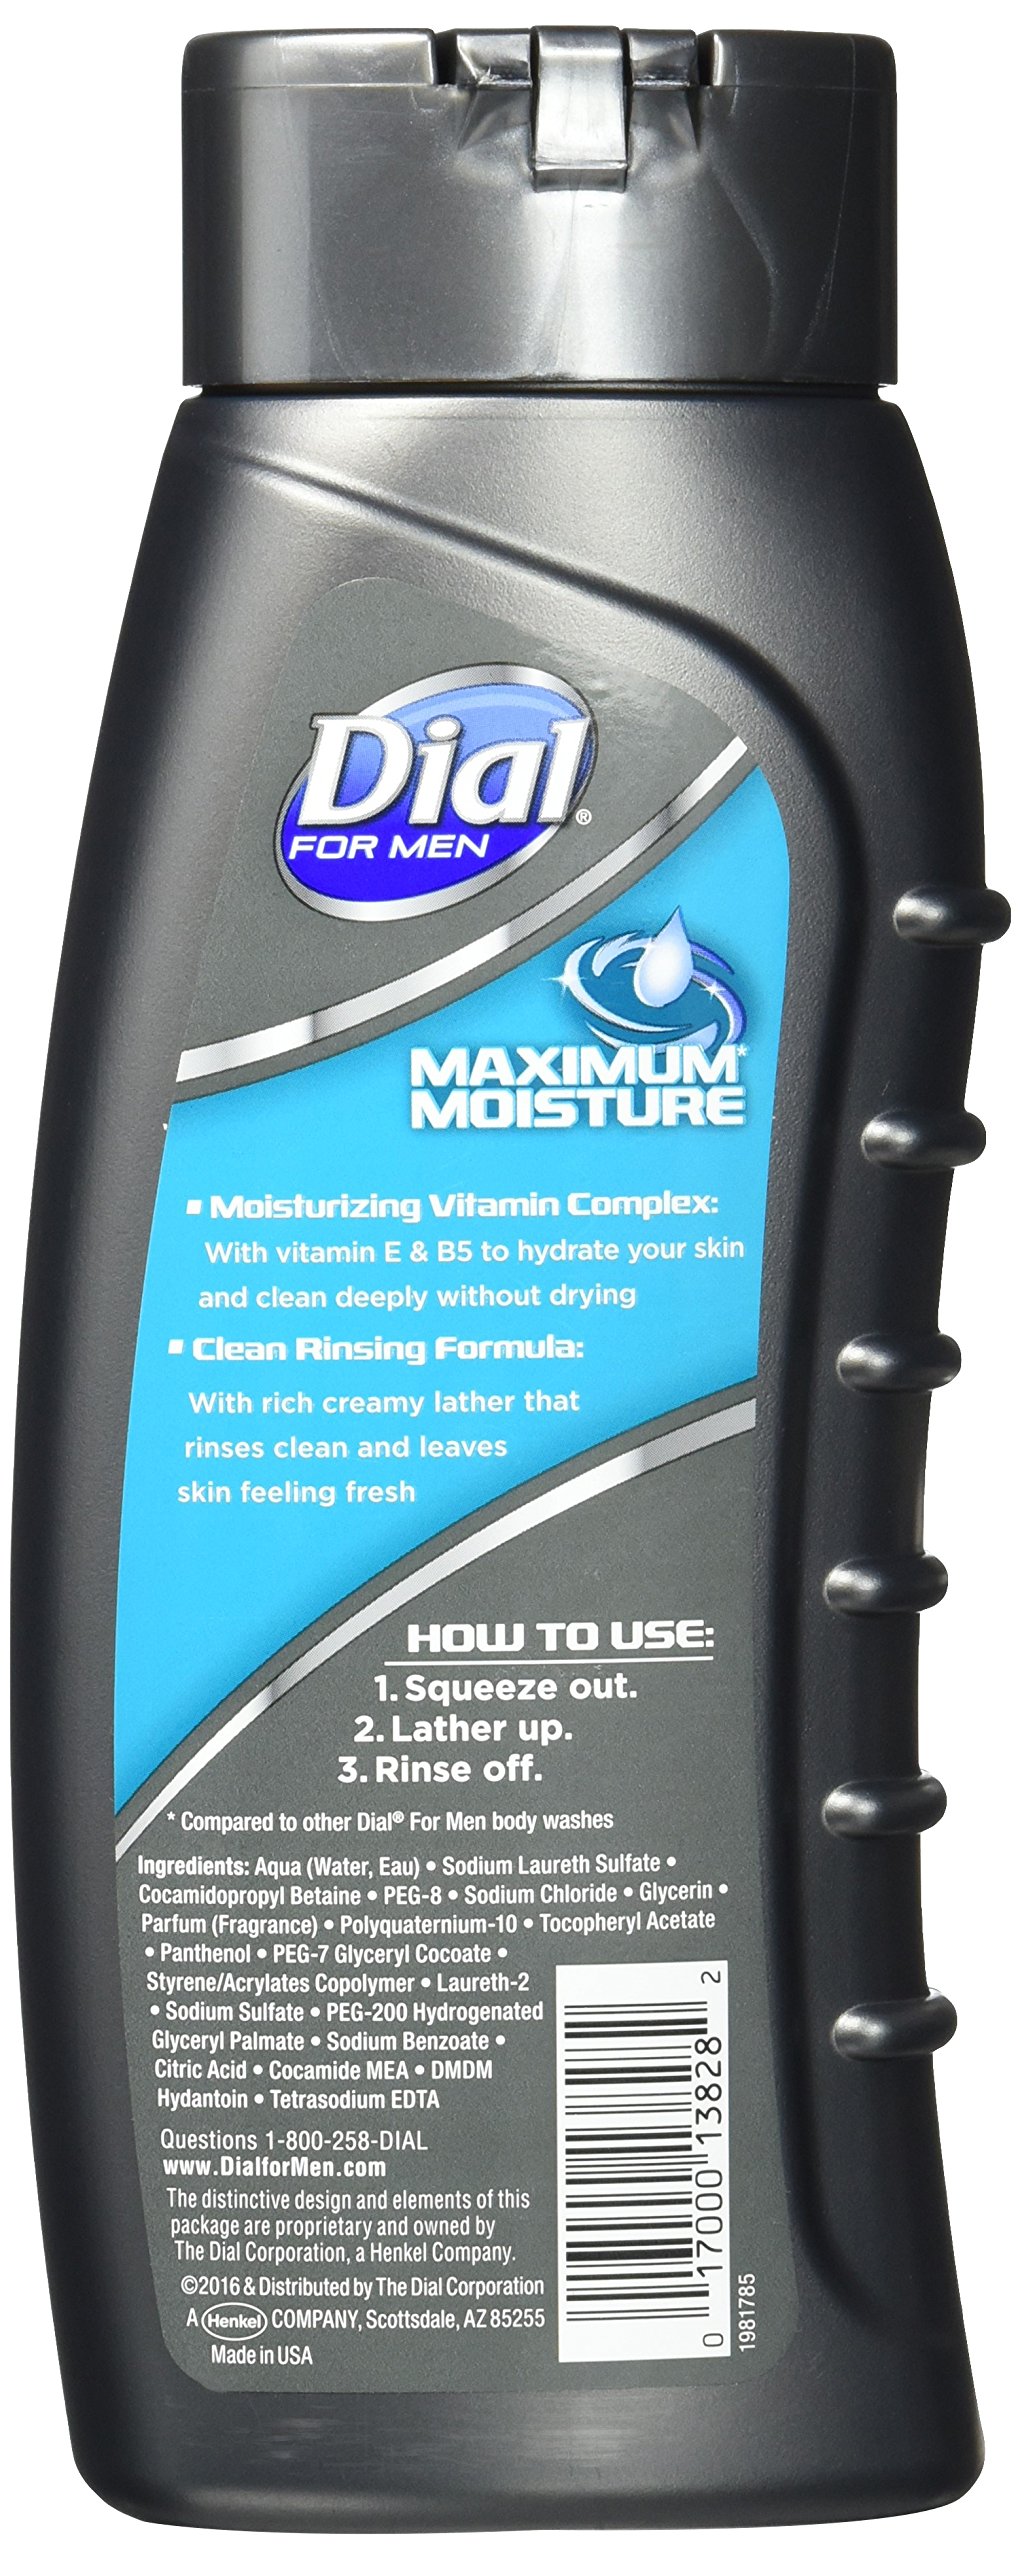 Dial for Men Maximum Moisture Ultra Hydrating Body Wash, 16 Fl. Oz., Pack of 2